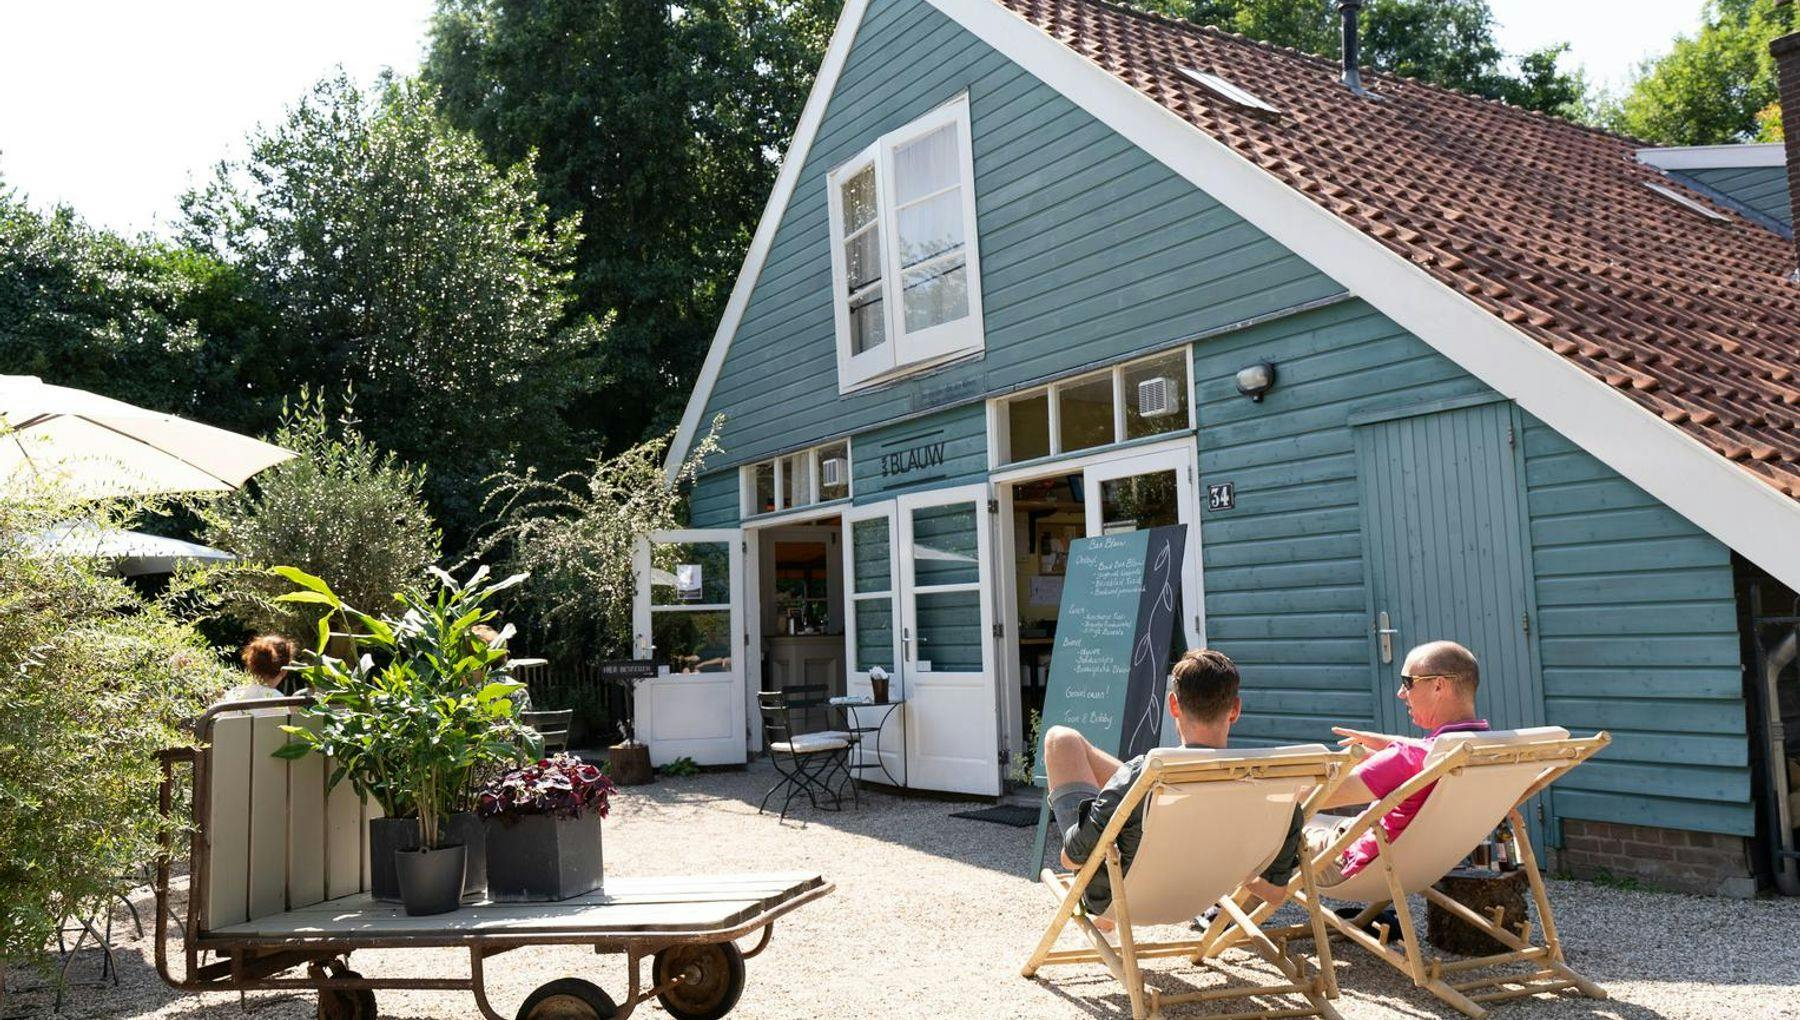 Tea house 'Blauw' in Weesp
People sitting outside Bar Blauw